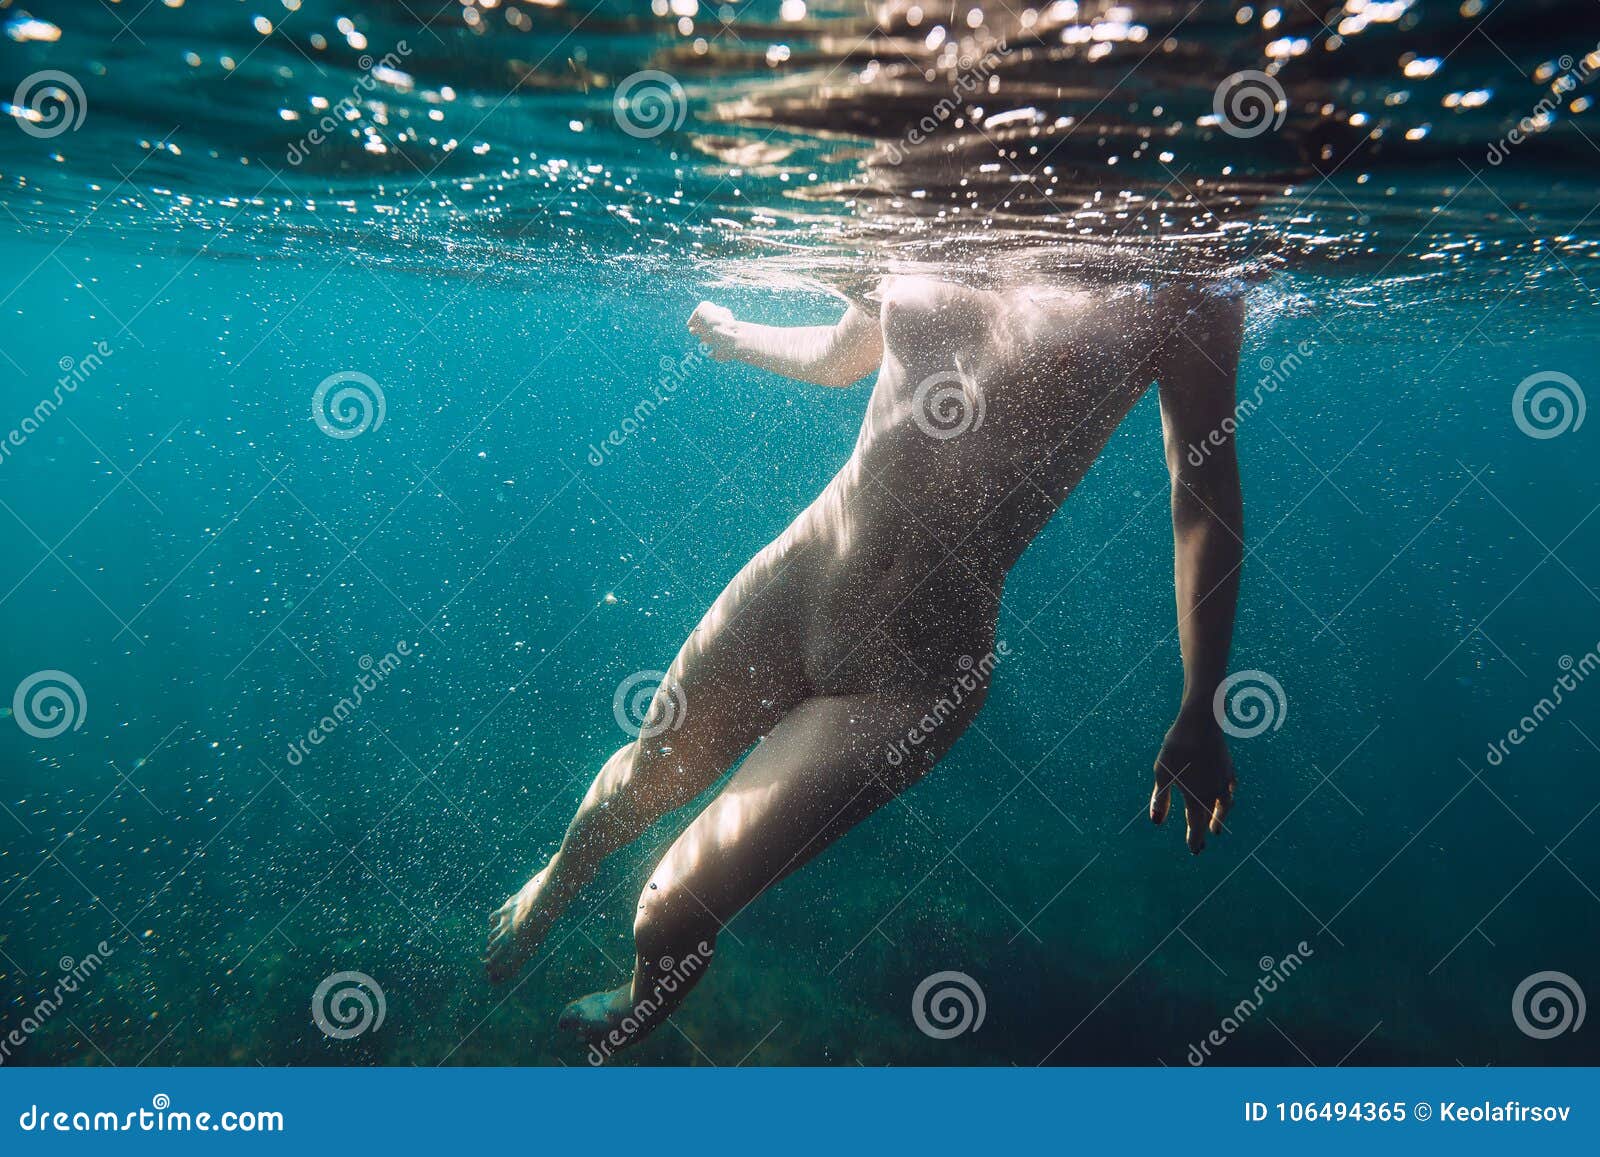 dena reynolds add nude women swimming underwater photo